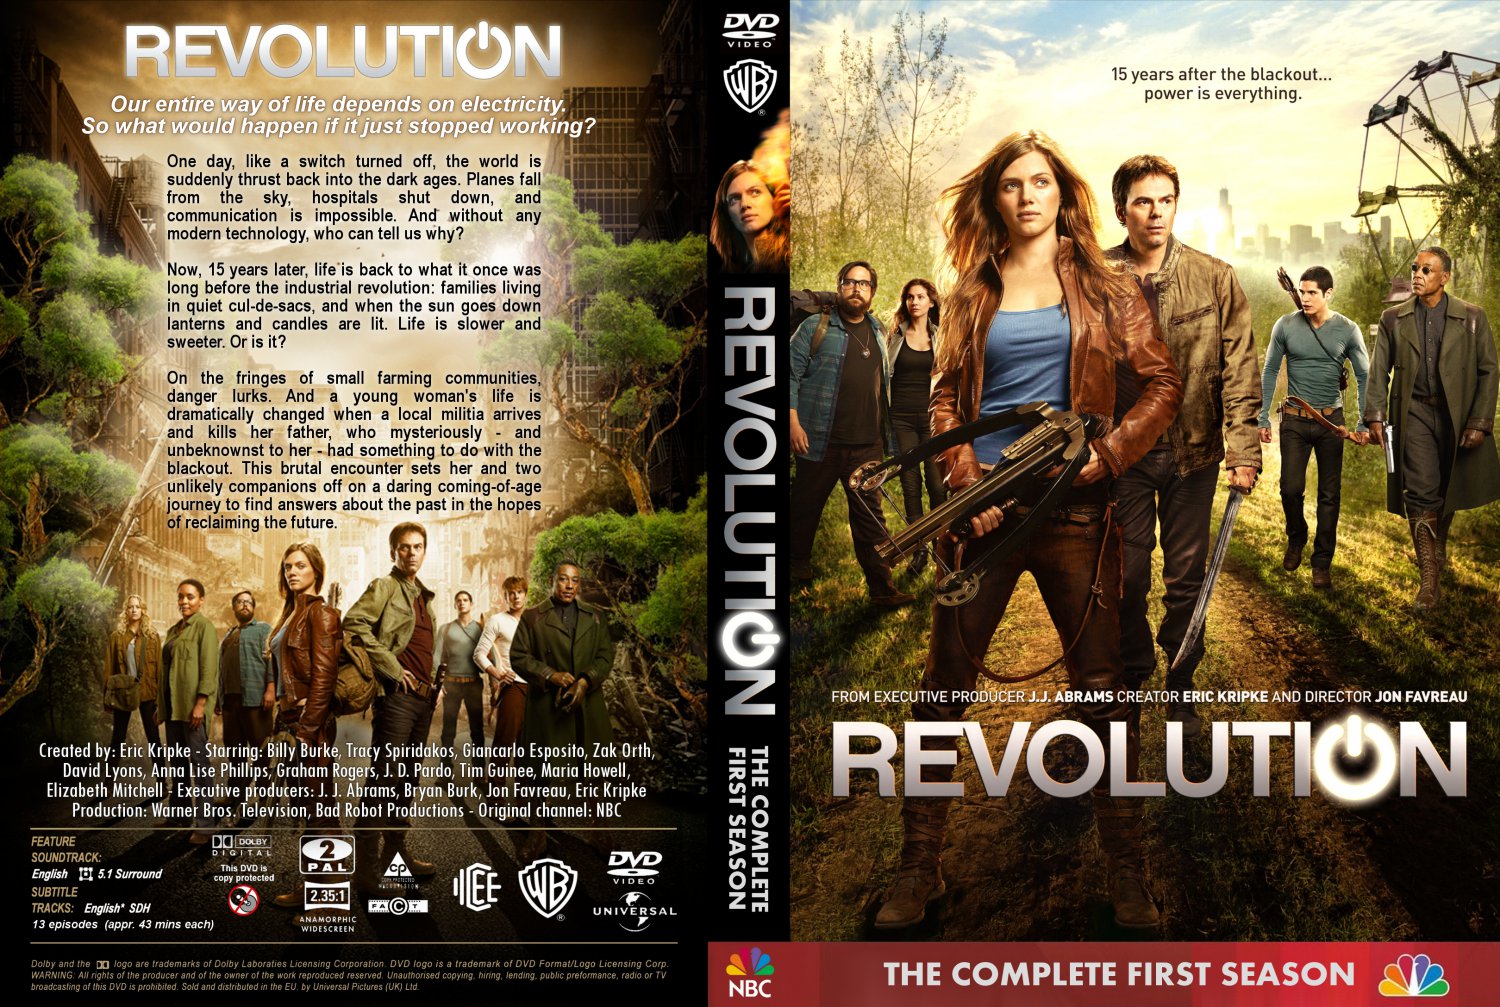 Revolution - Season 2 watch online for free - #1 Movies